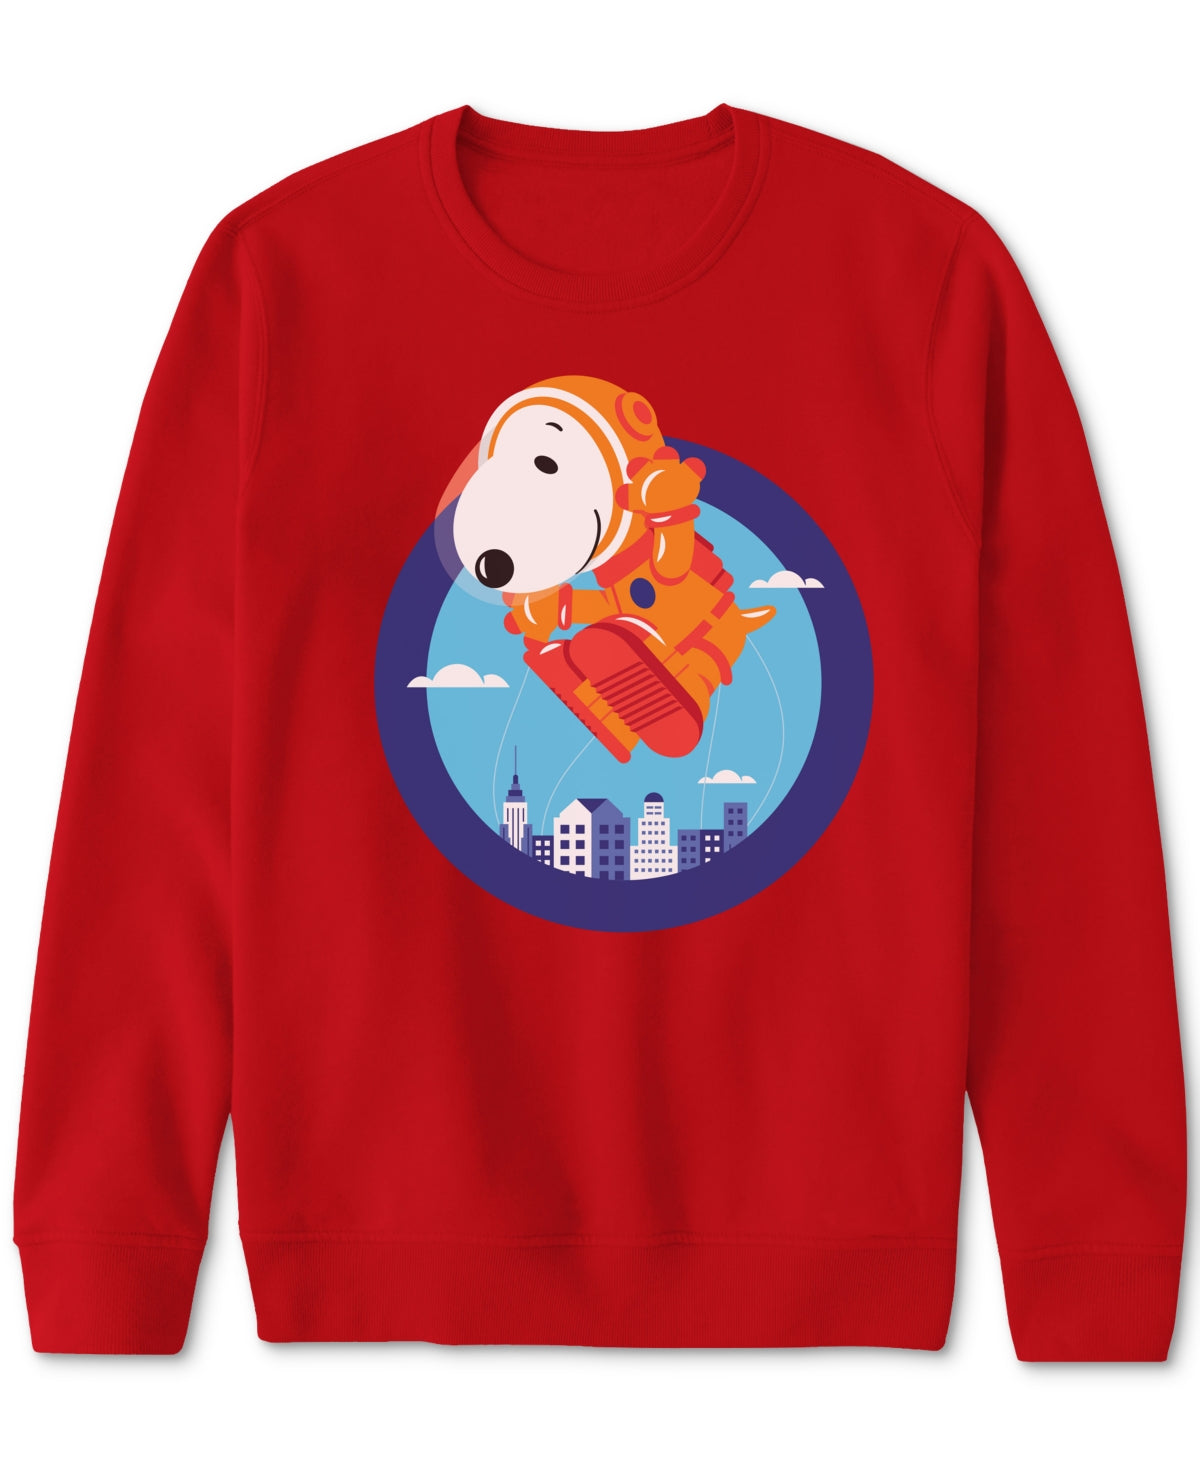 Hybrid Apparel Adult Unisex Snoopy Macy's Thanksgiving Day Parade Crewneck Sweatshirt